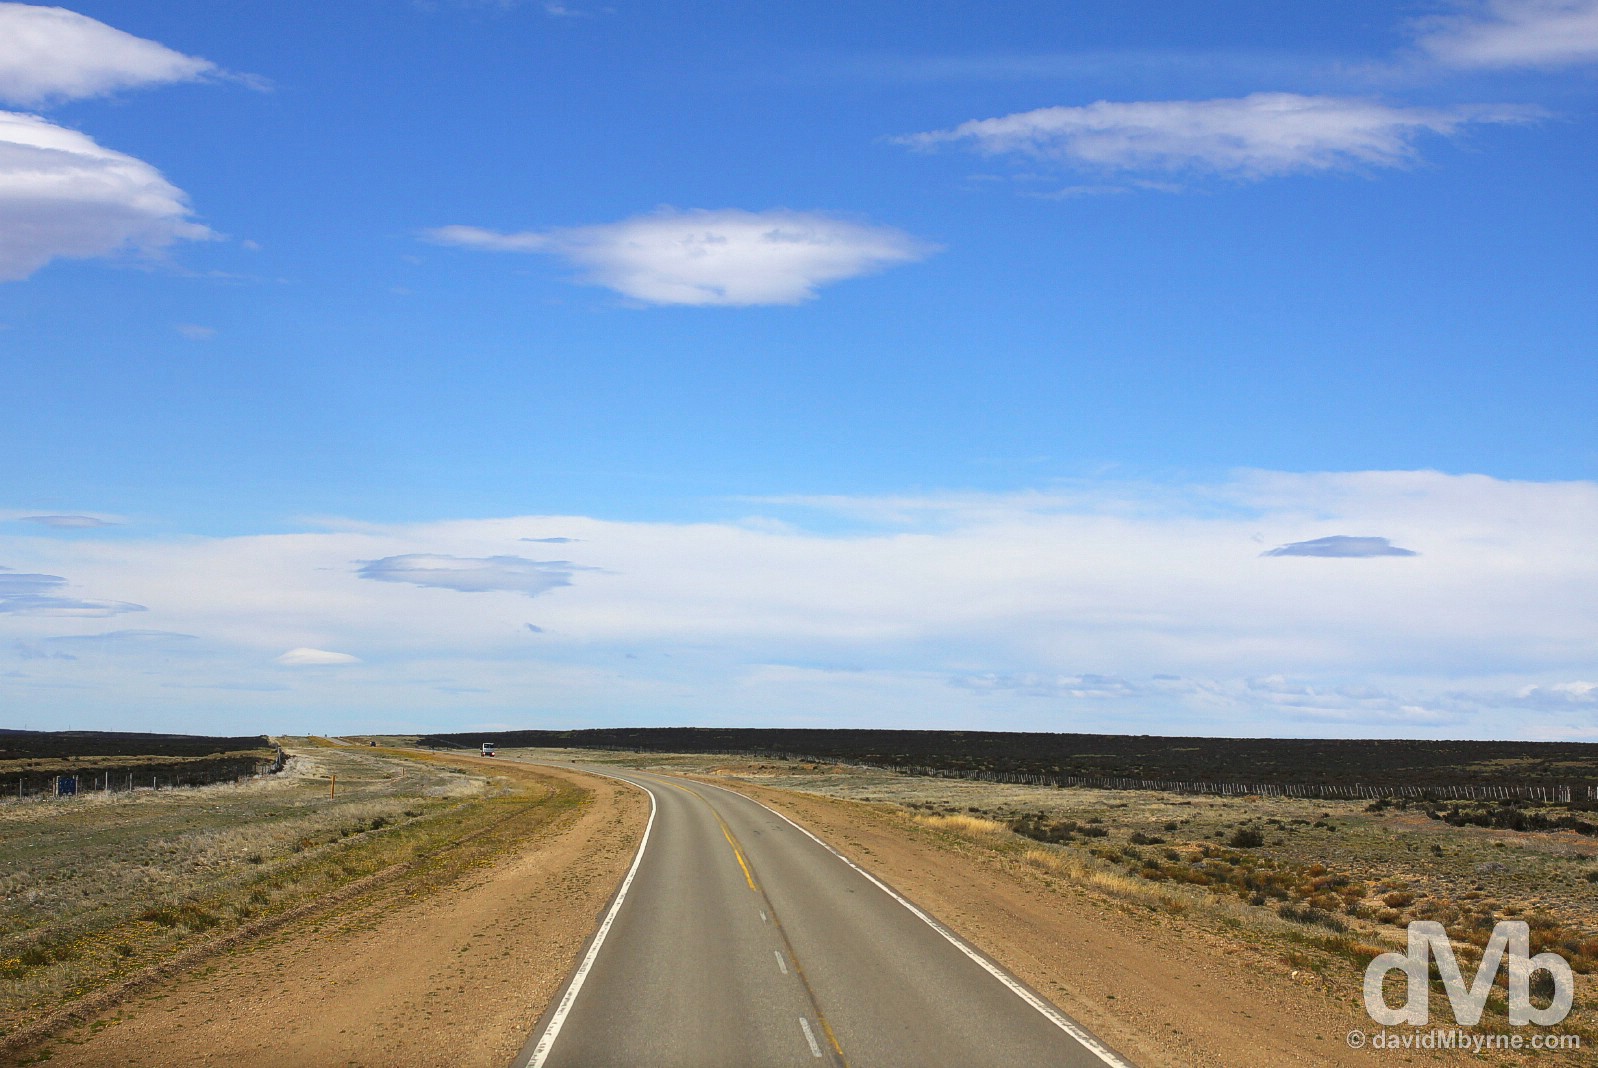 Ruta 5, Patagonia, Argentina. November 1, 2015.